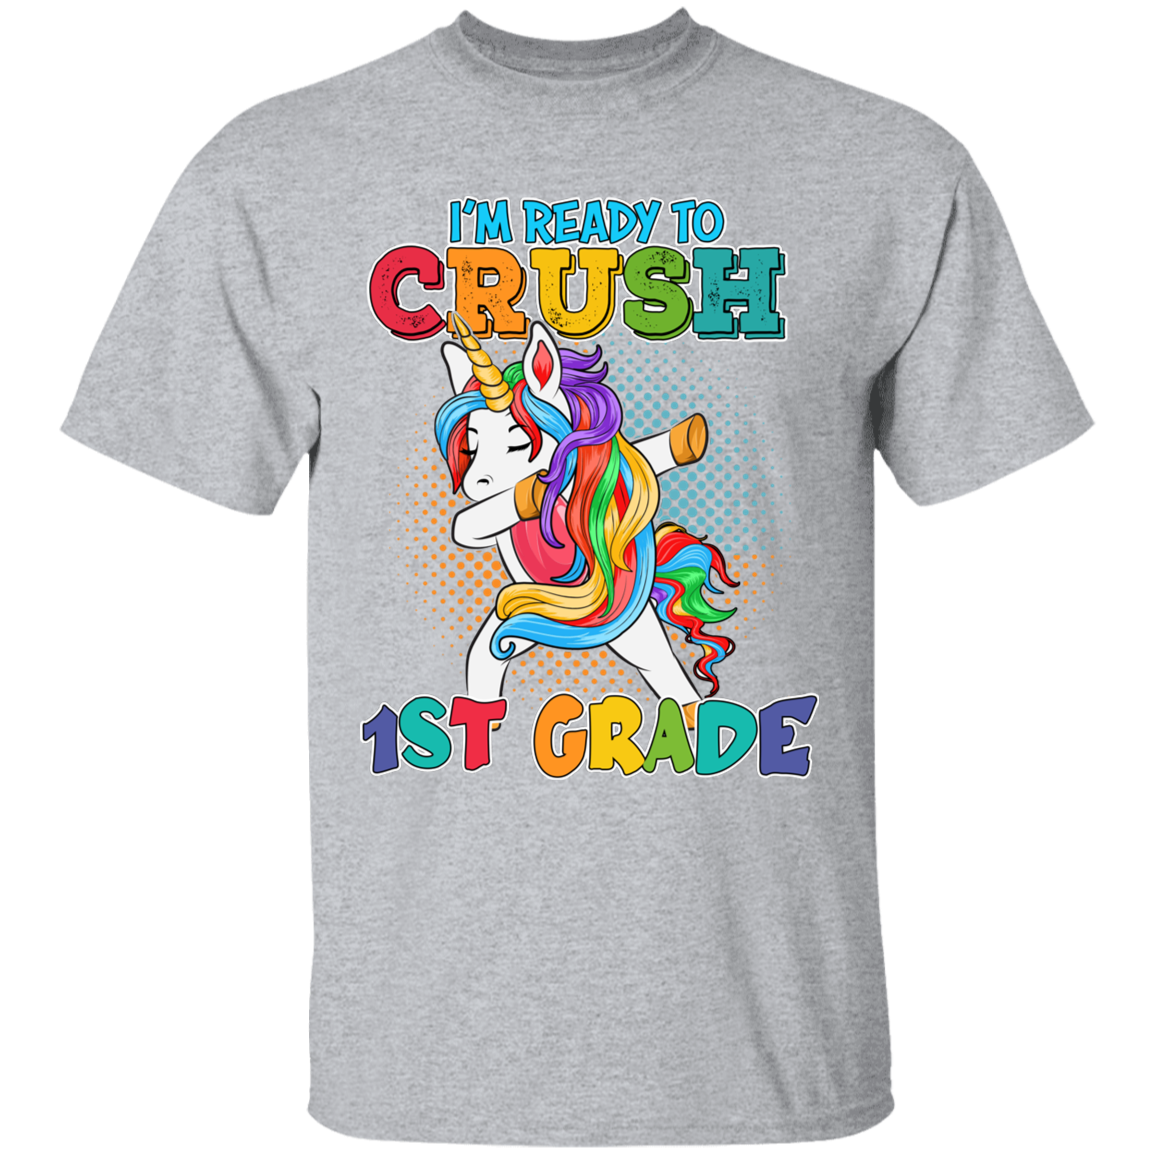 I'm Ready to Crush 1st Grade Youth Cotton T-Shirt